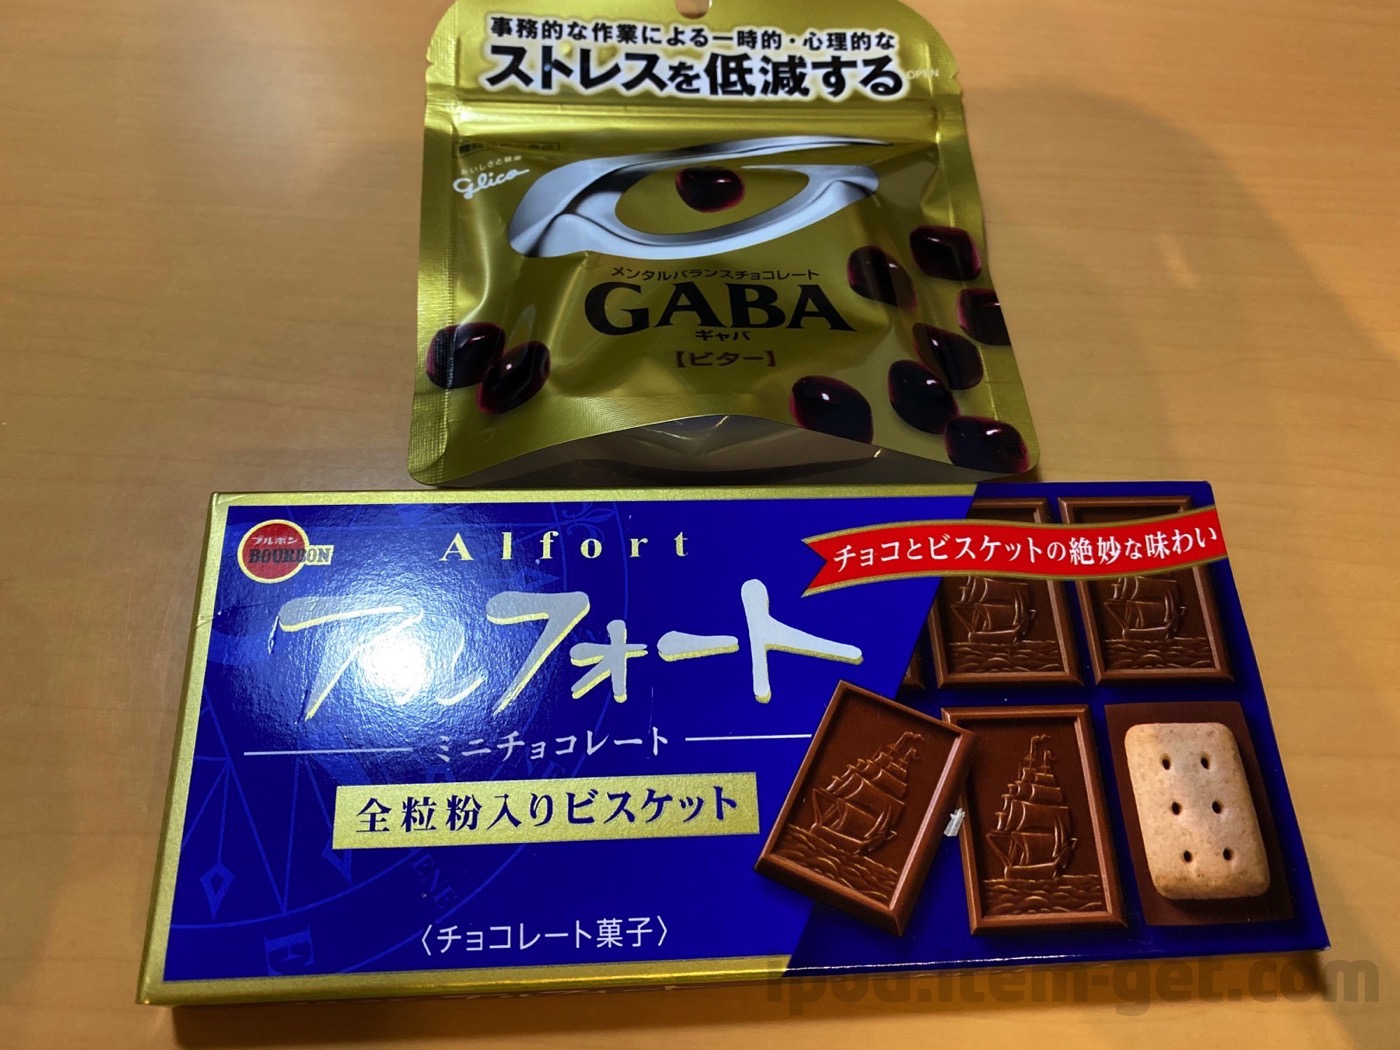 GABA chocolate 02